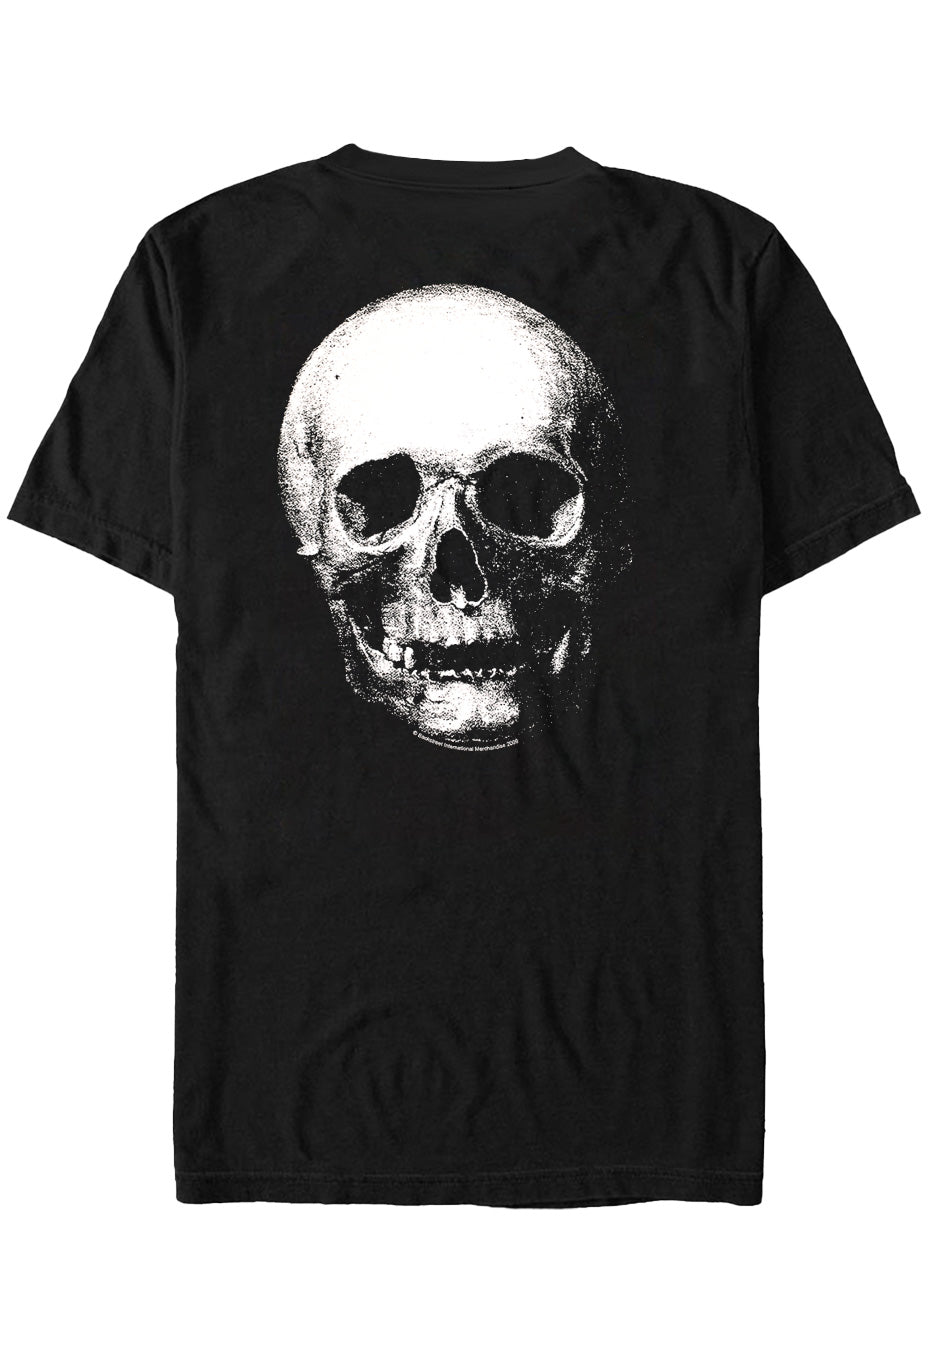 Satyricon - Black Crow - T-Shirt